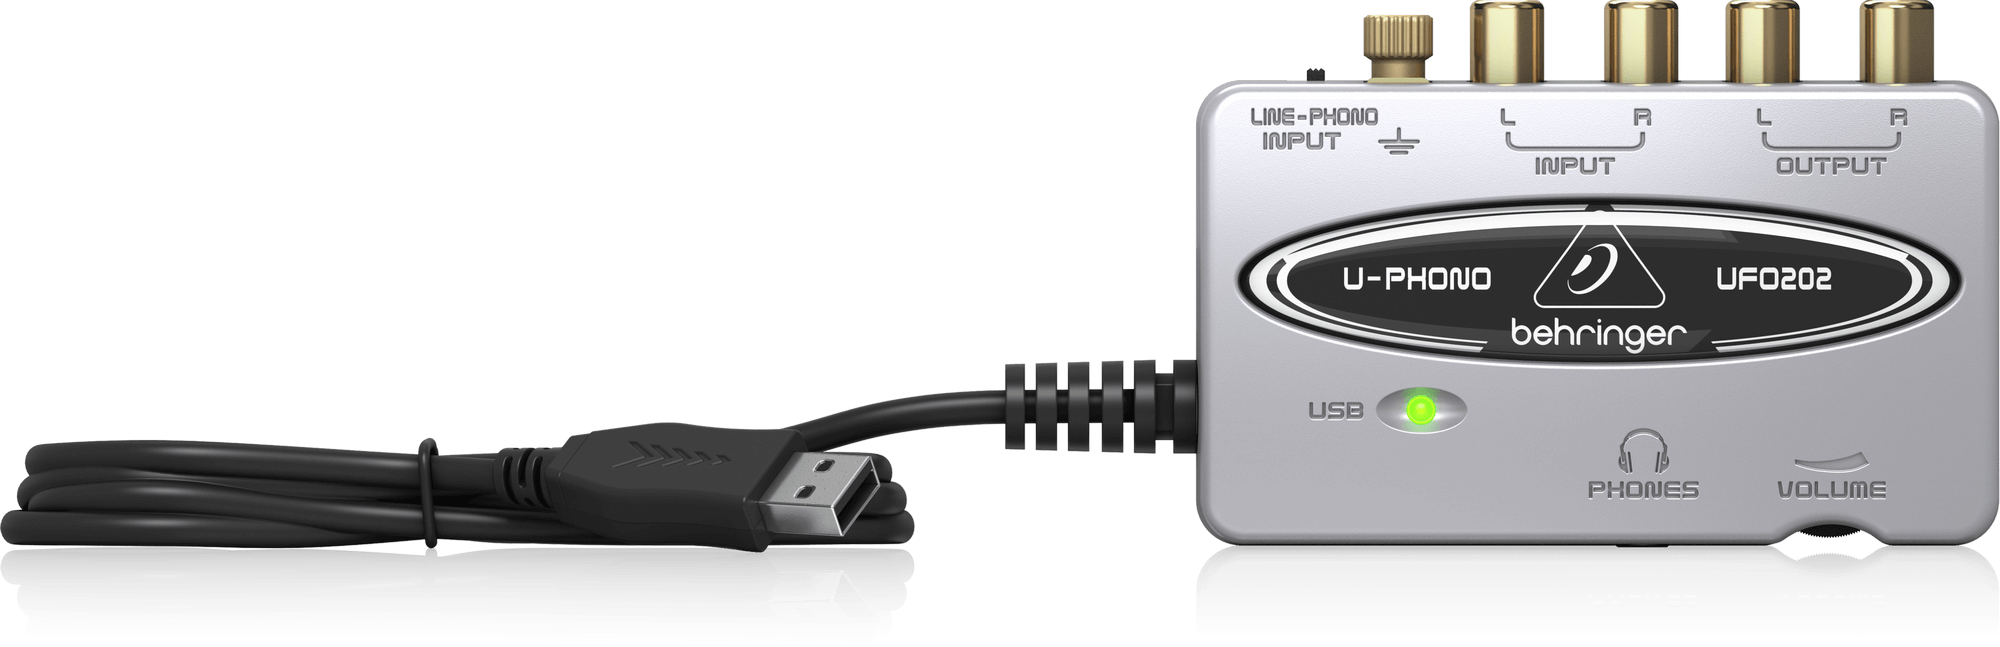 Behringer UFO202 USB Interfase de audio preamplificador Phono integr.  favorable buying at our shop